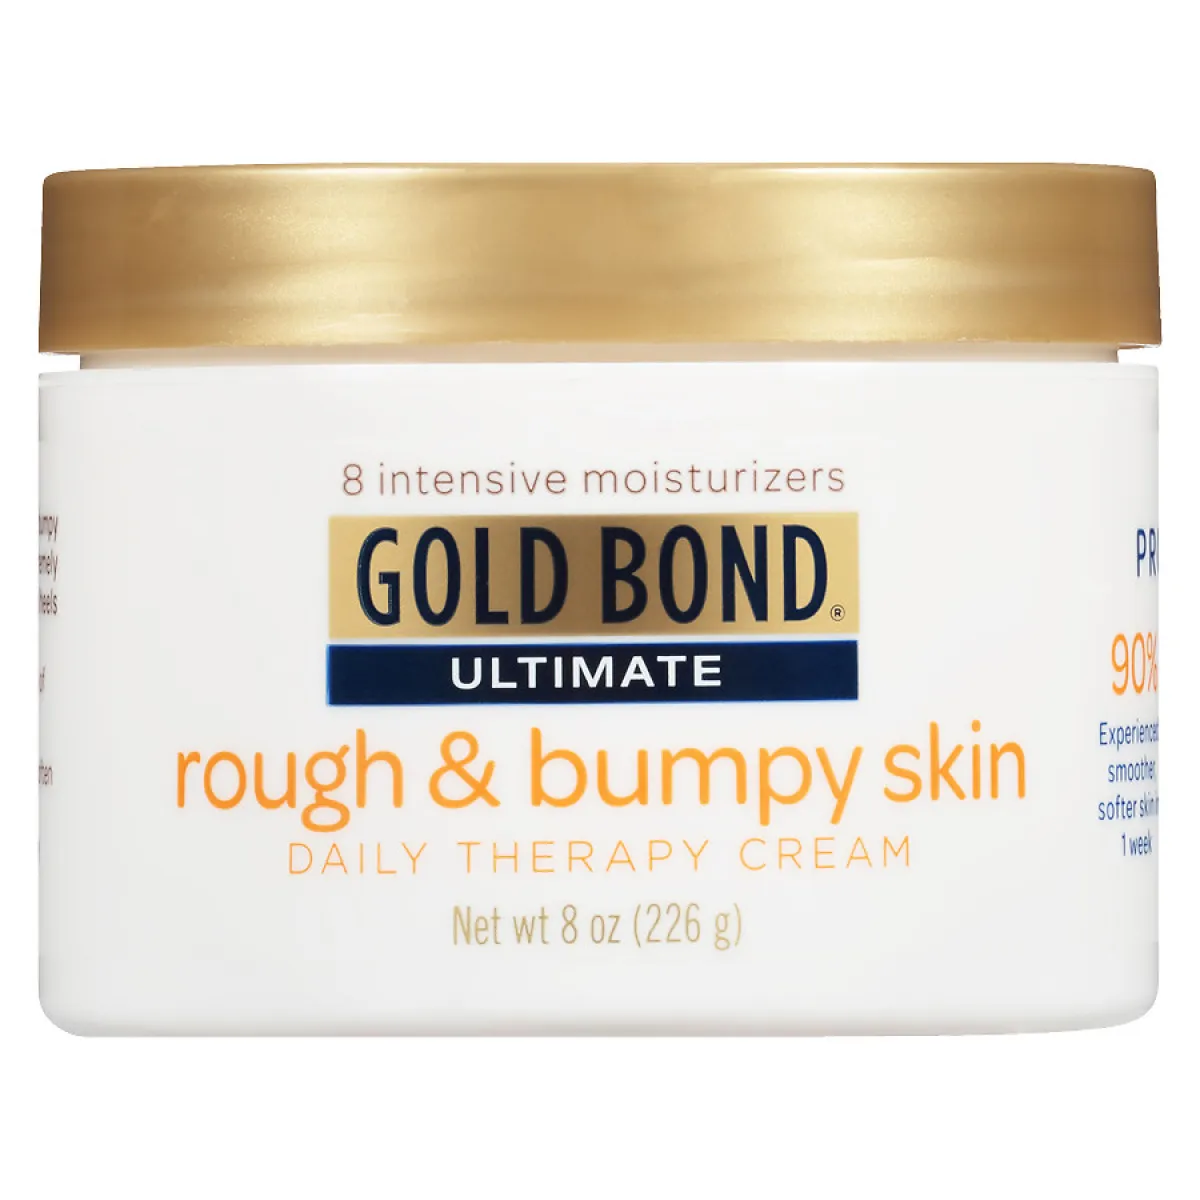 FEMMENORDIC's choice in the Gold Bond Rough and Bumpy vs AmLactin comparison, Gold Bond Rough & Bumpy Skin Daily Therapy Cream